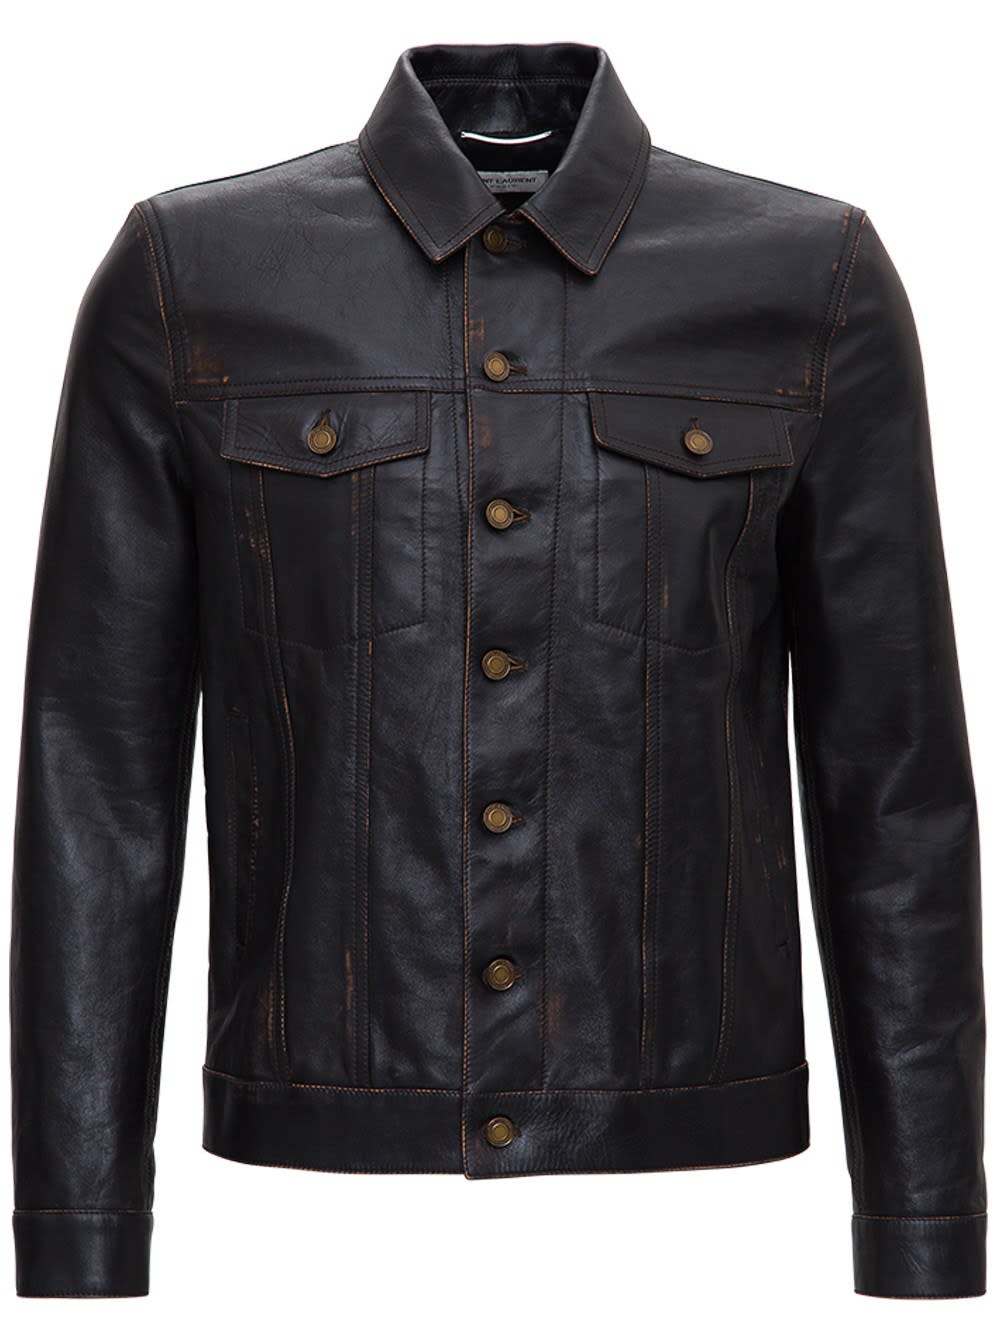 Saint Laurent Aged Leather Jacket